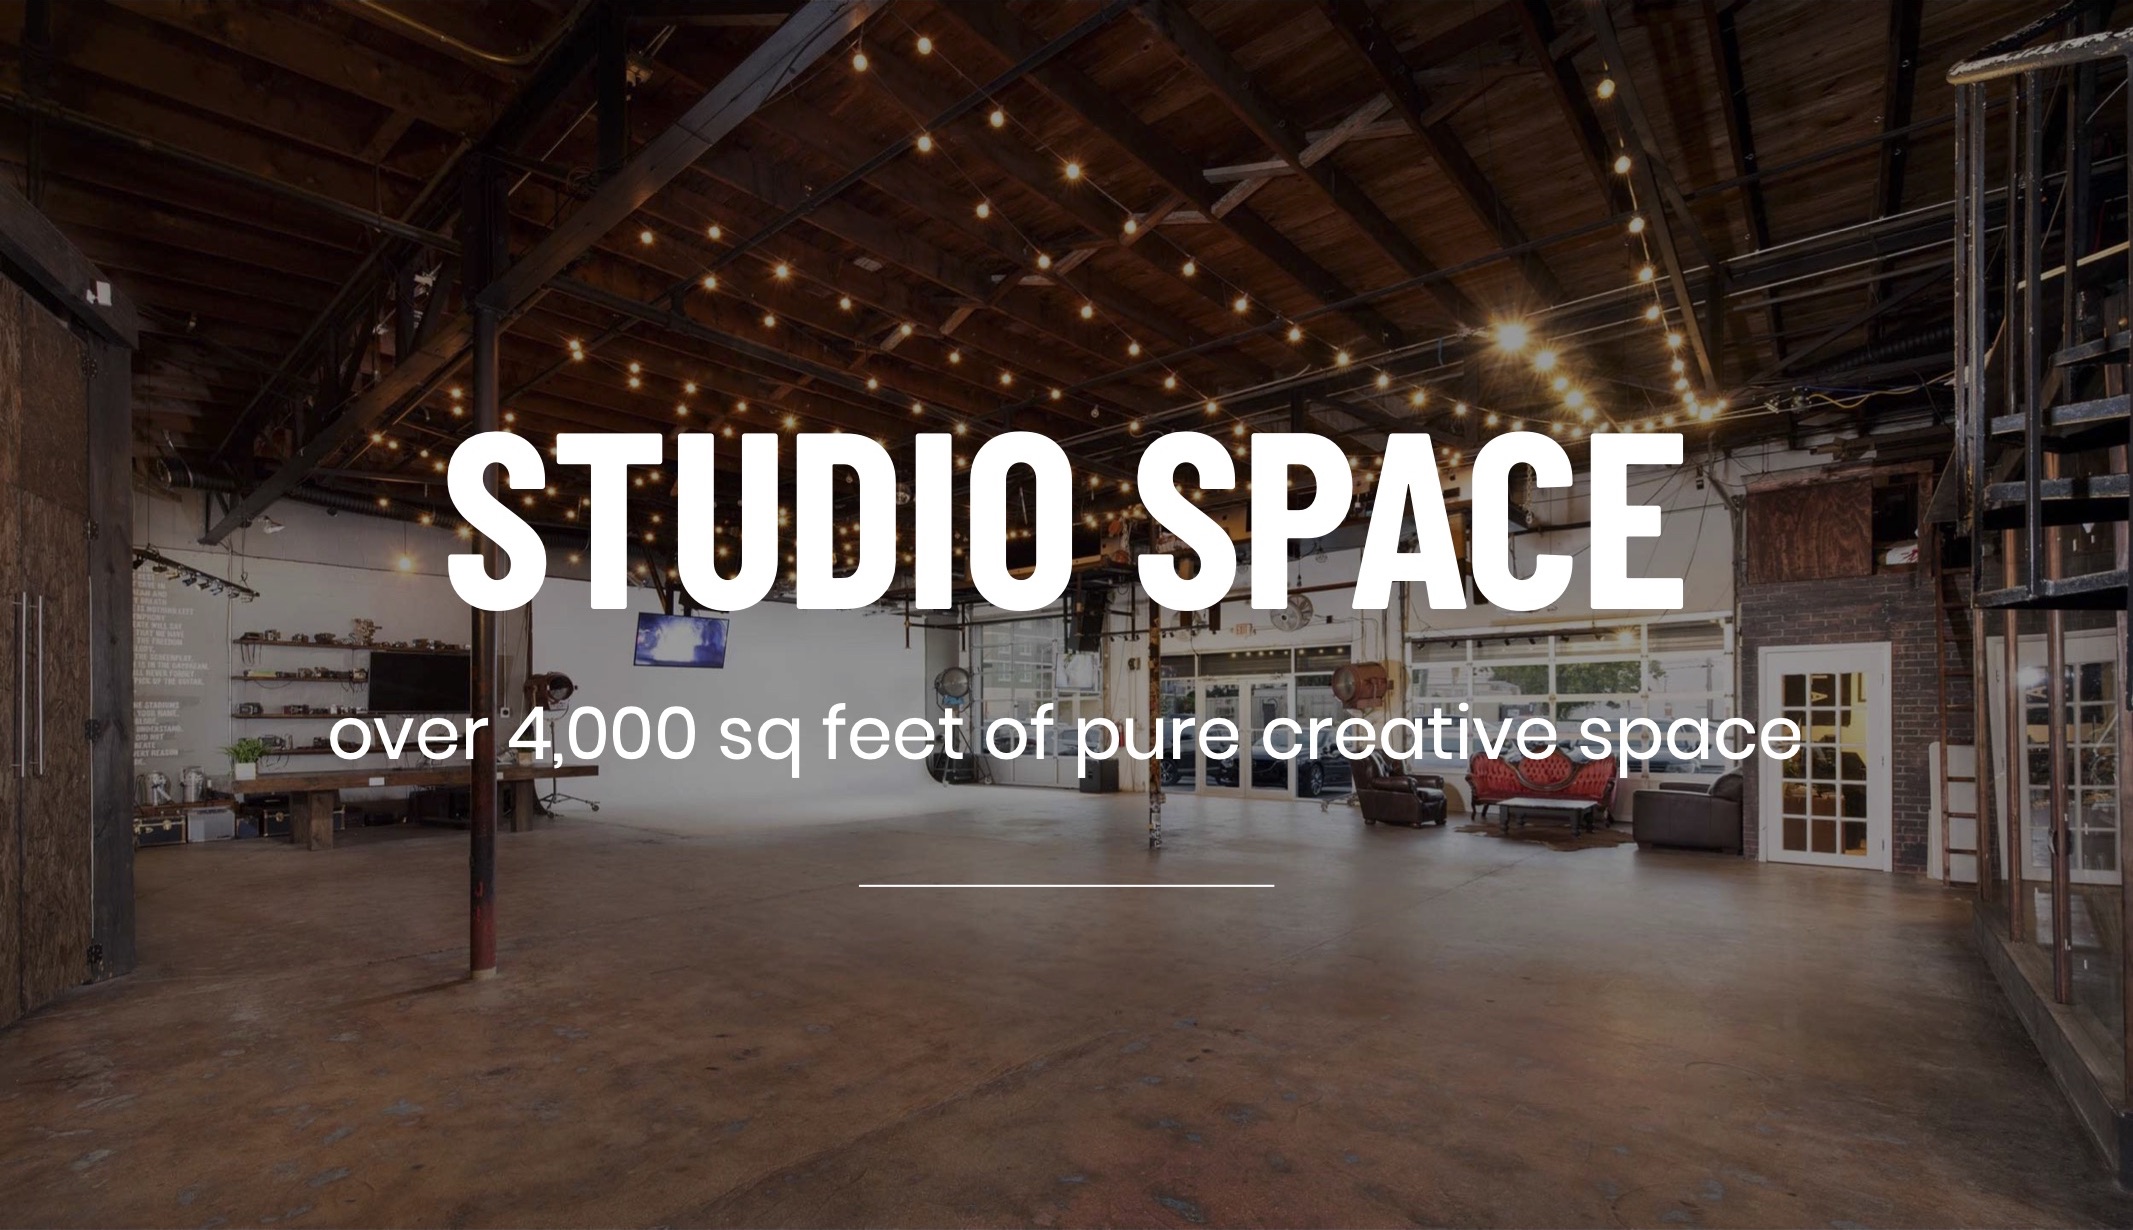 Production Resources Studio Space